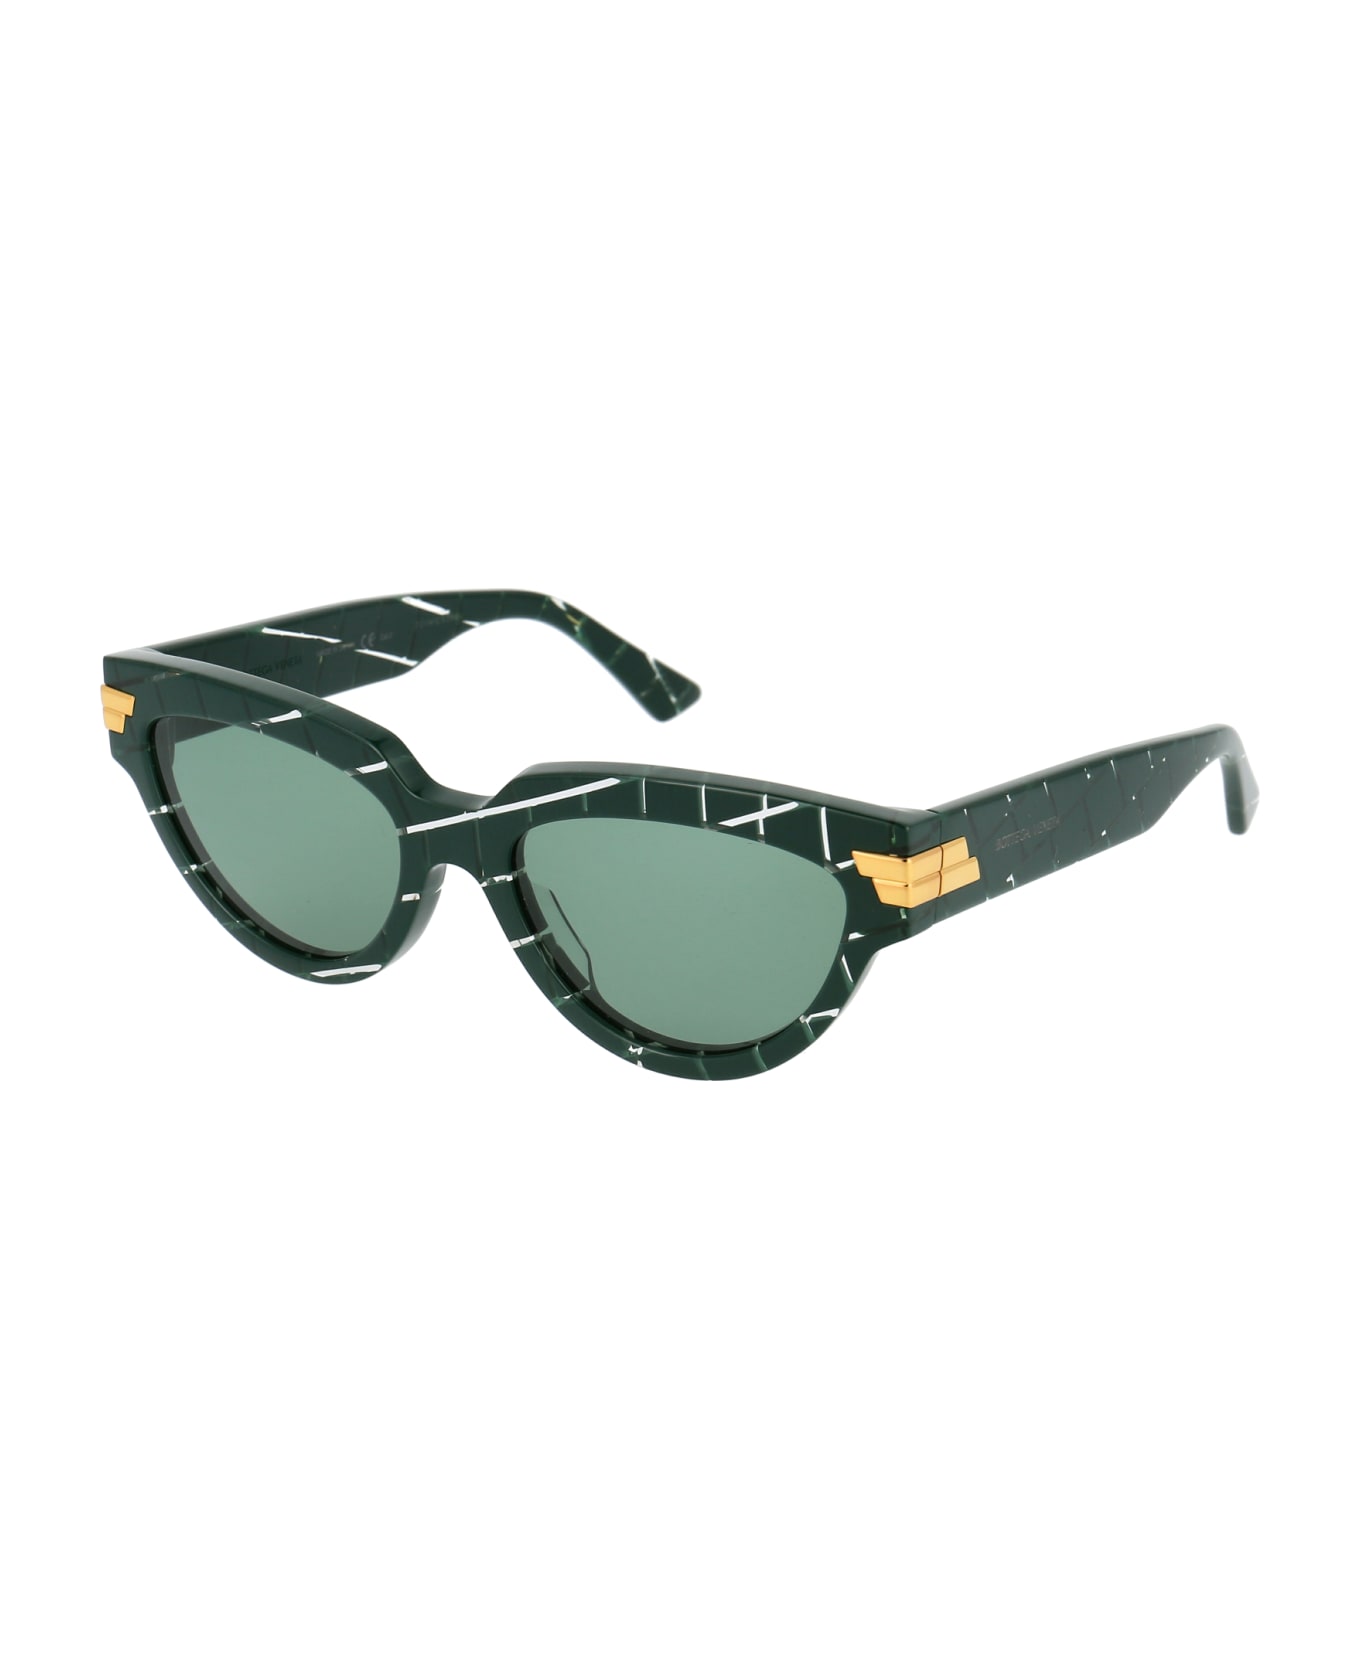 Bottega Veneta Eyewear Bv1035s Sunglasses - 004 GREEN GREEN GREEN